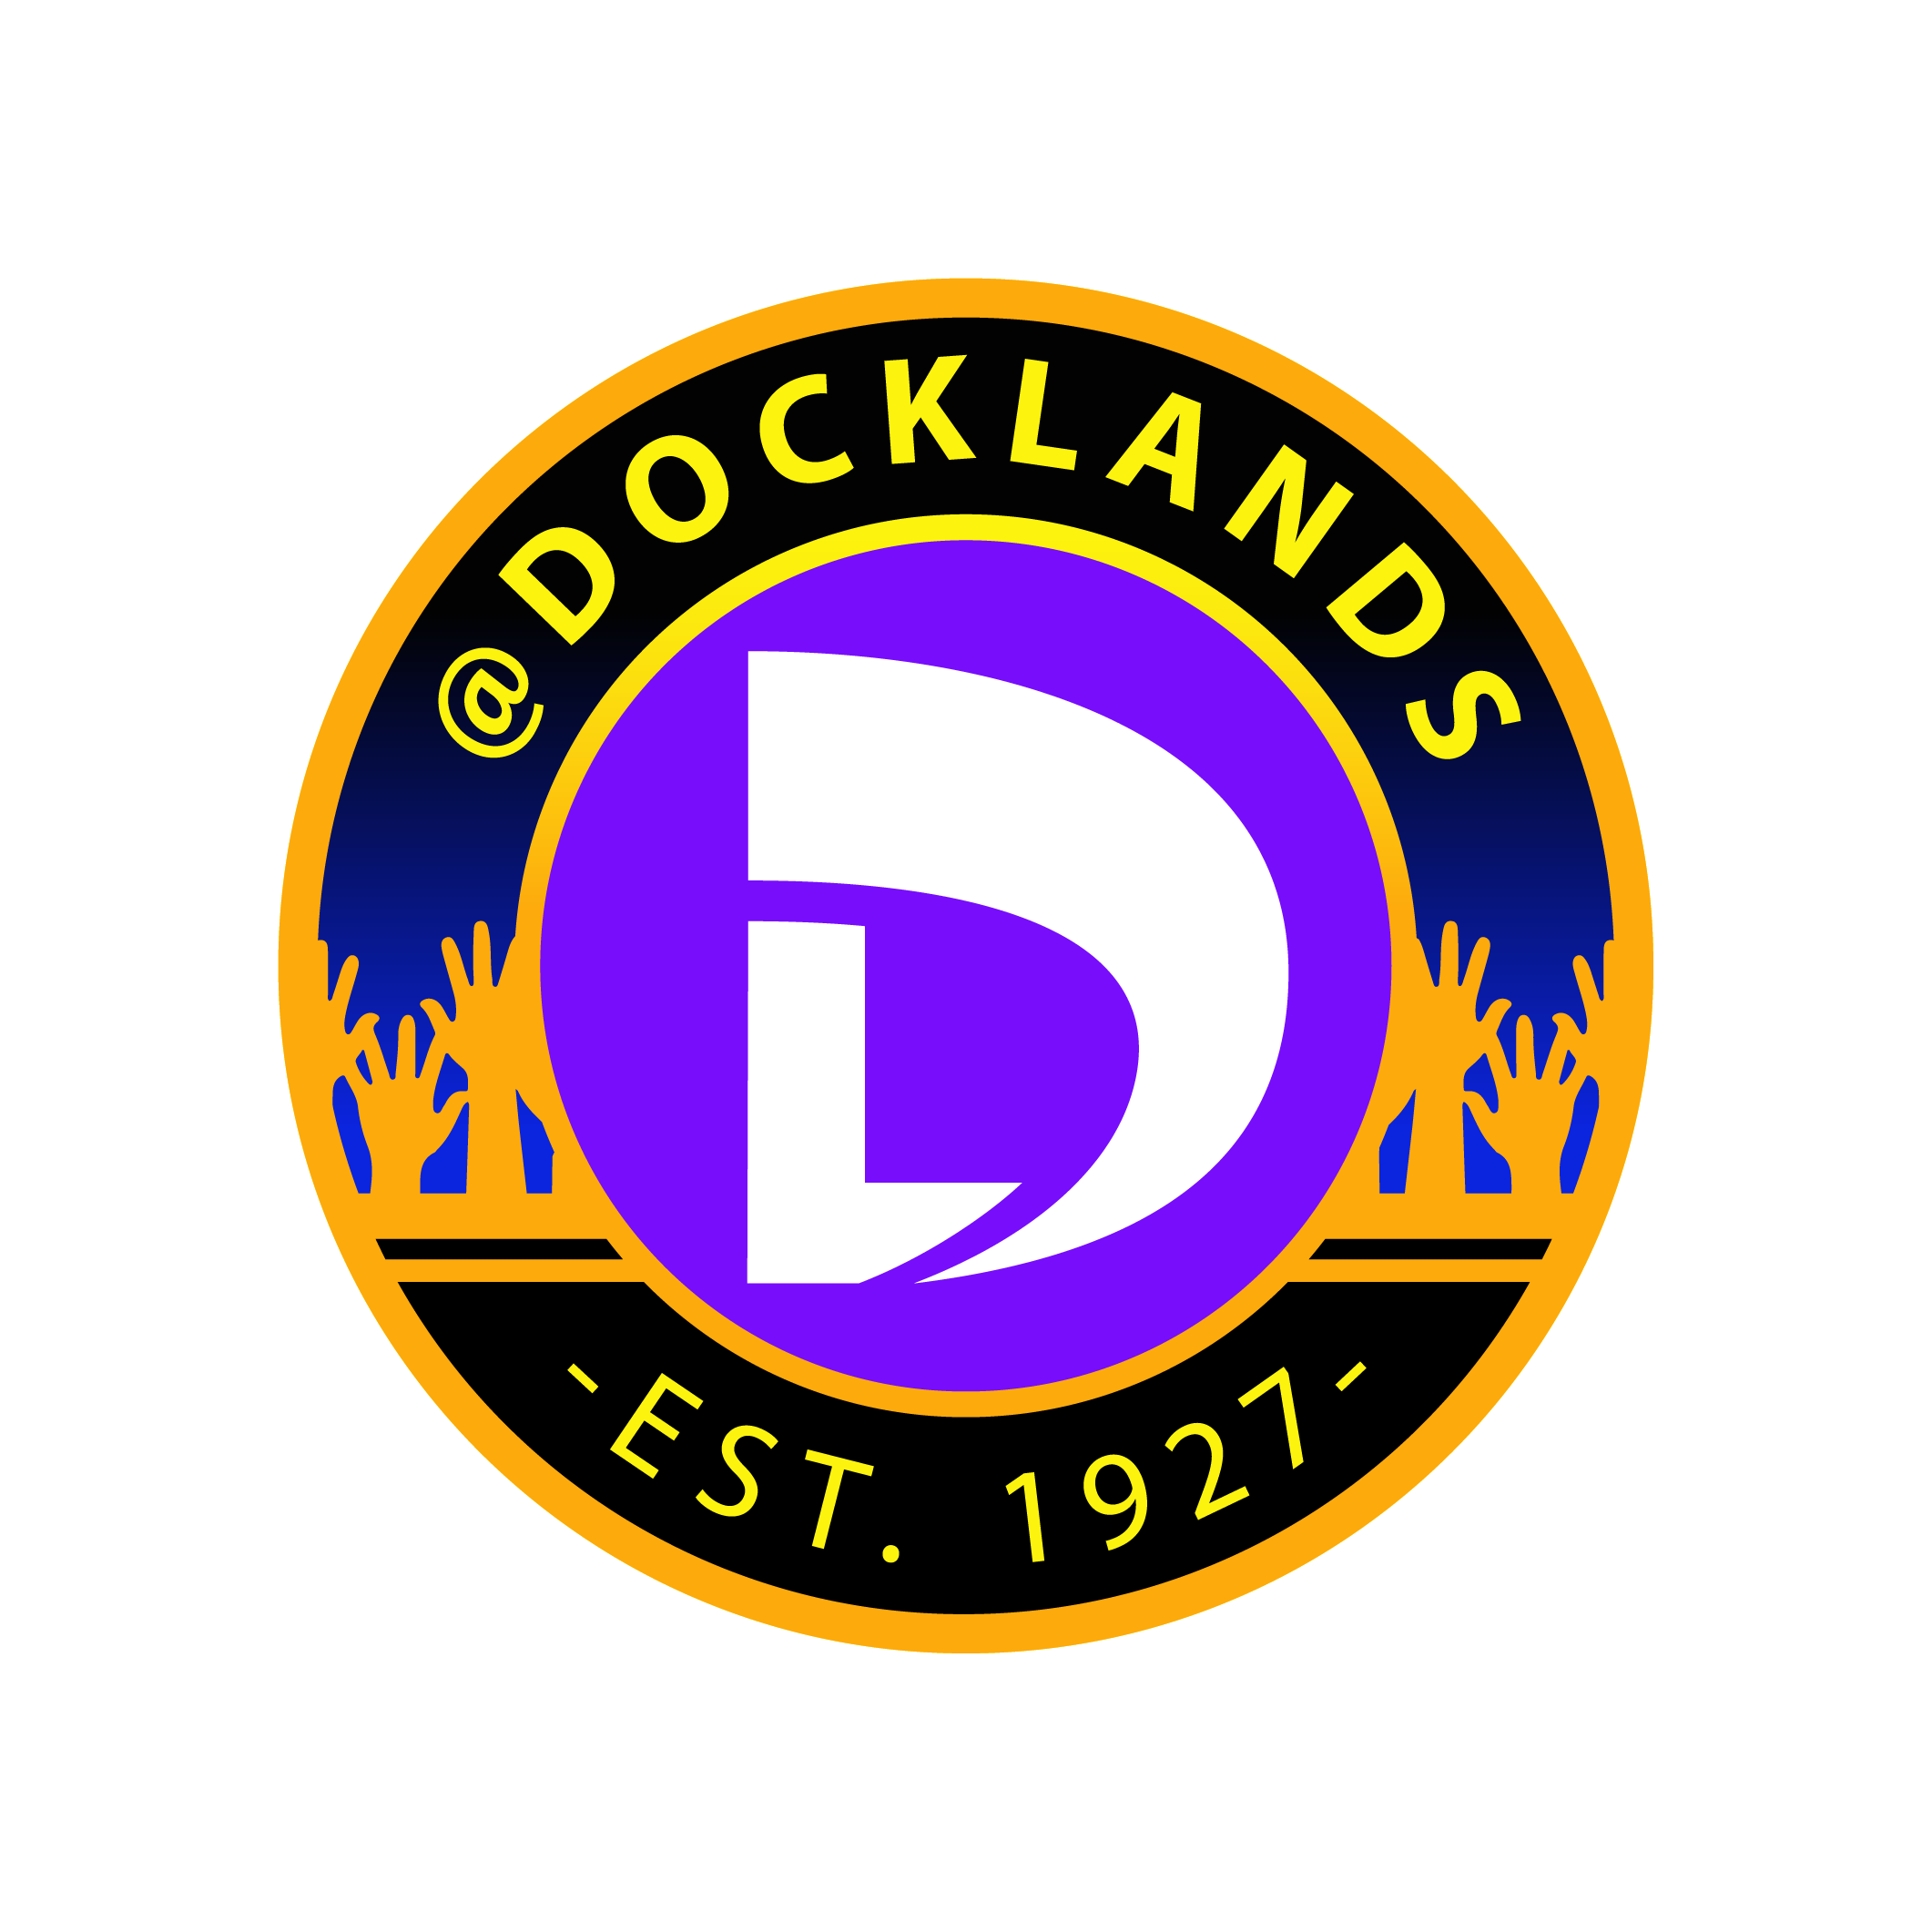 Docklands_vector_clean_trans-01